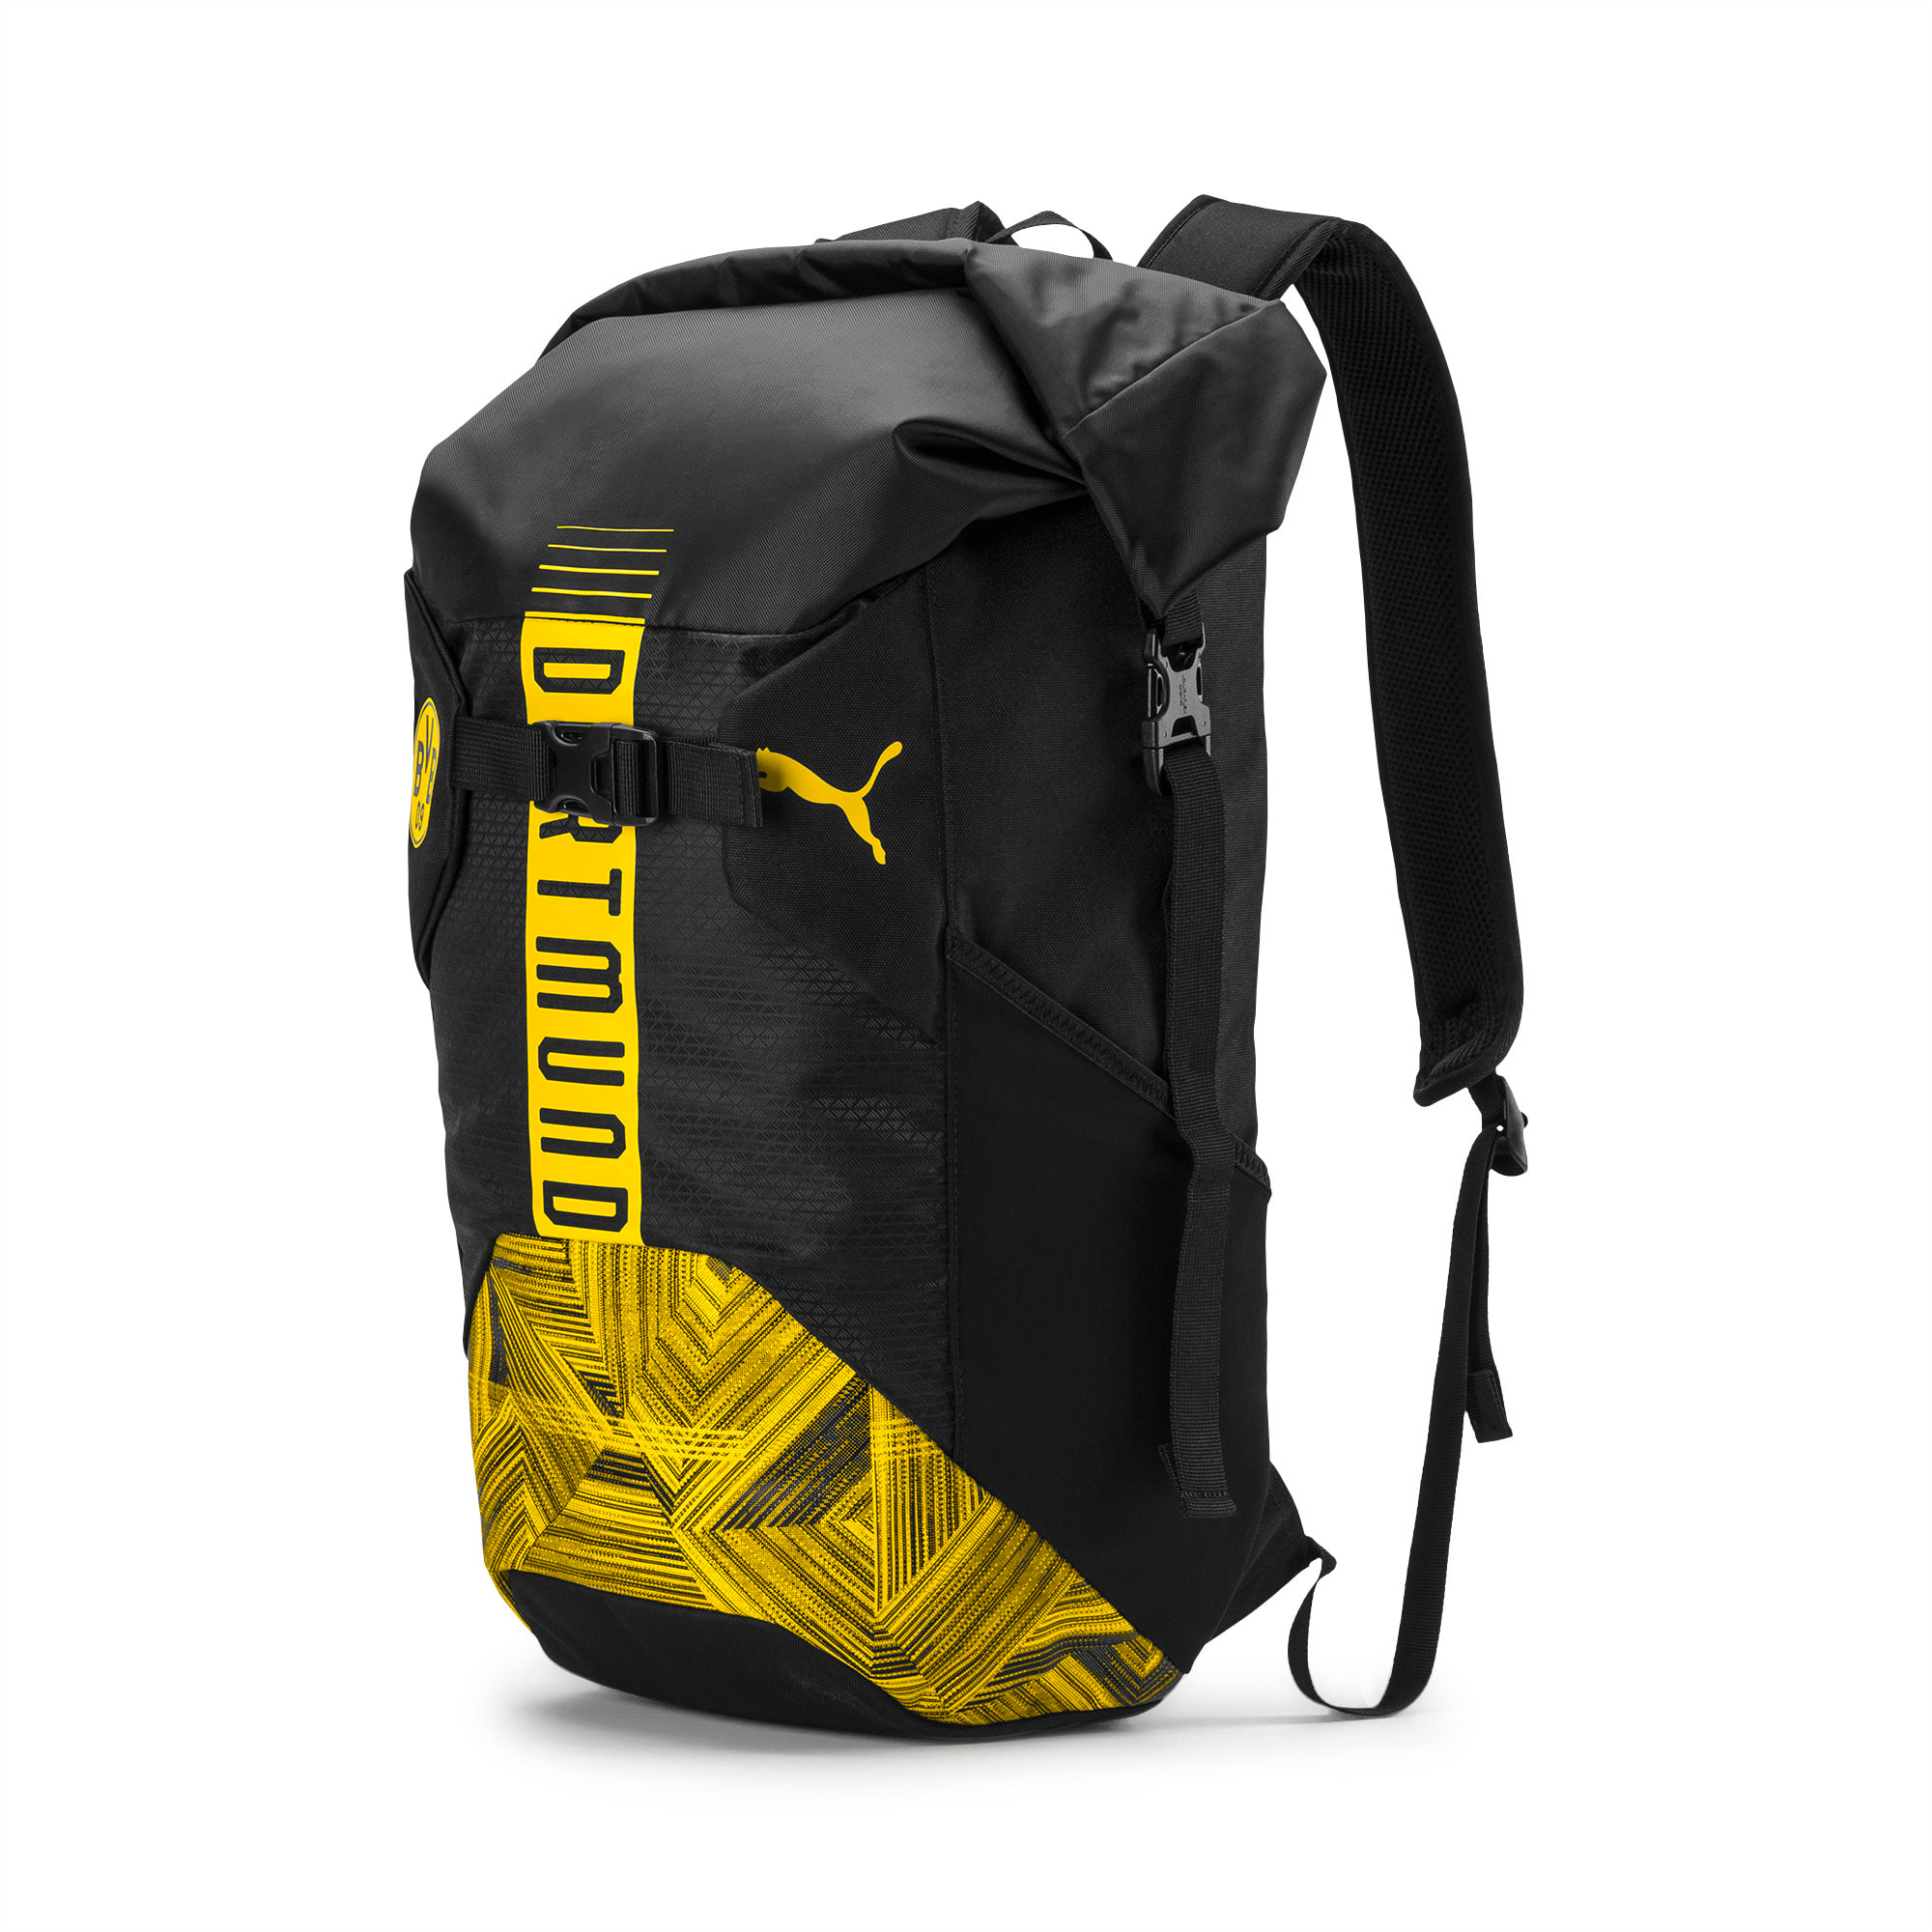 yellow puma backpack